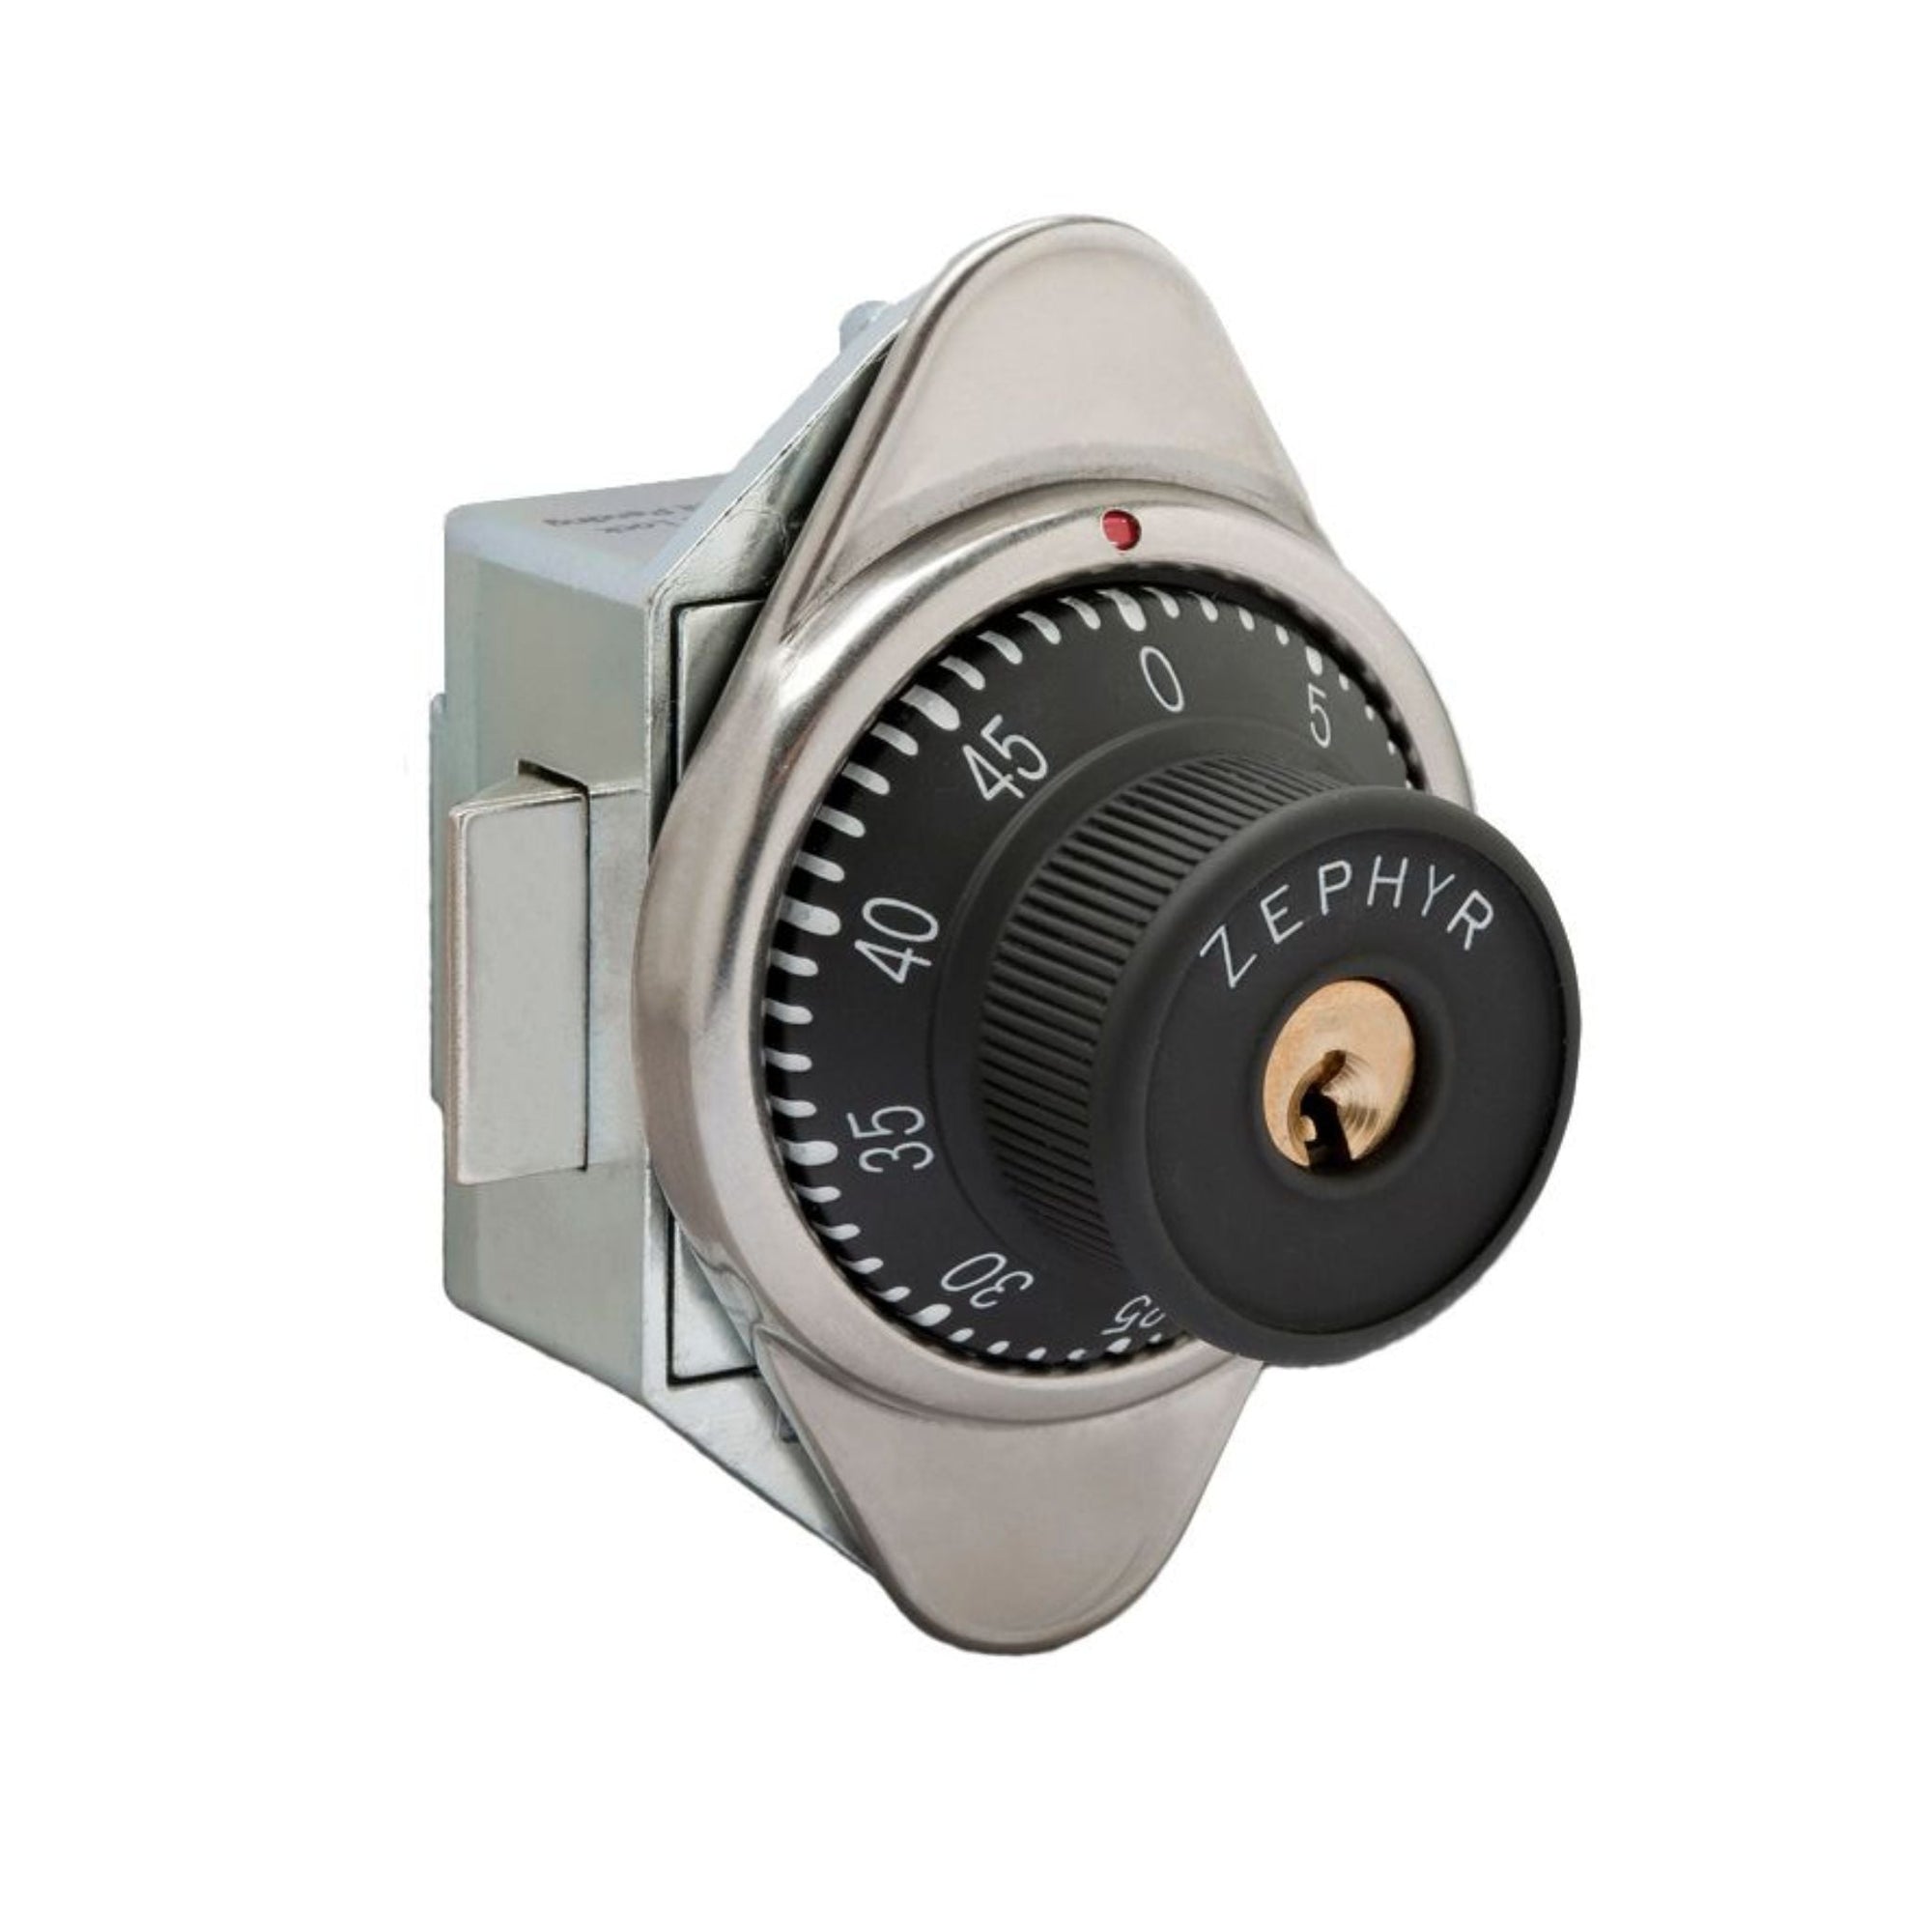 Zephyr Lock 1954 RH Combination Locker Padlock Fits Gravity Style and Multi Point Lockers - The Lock Source